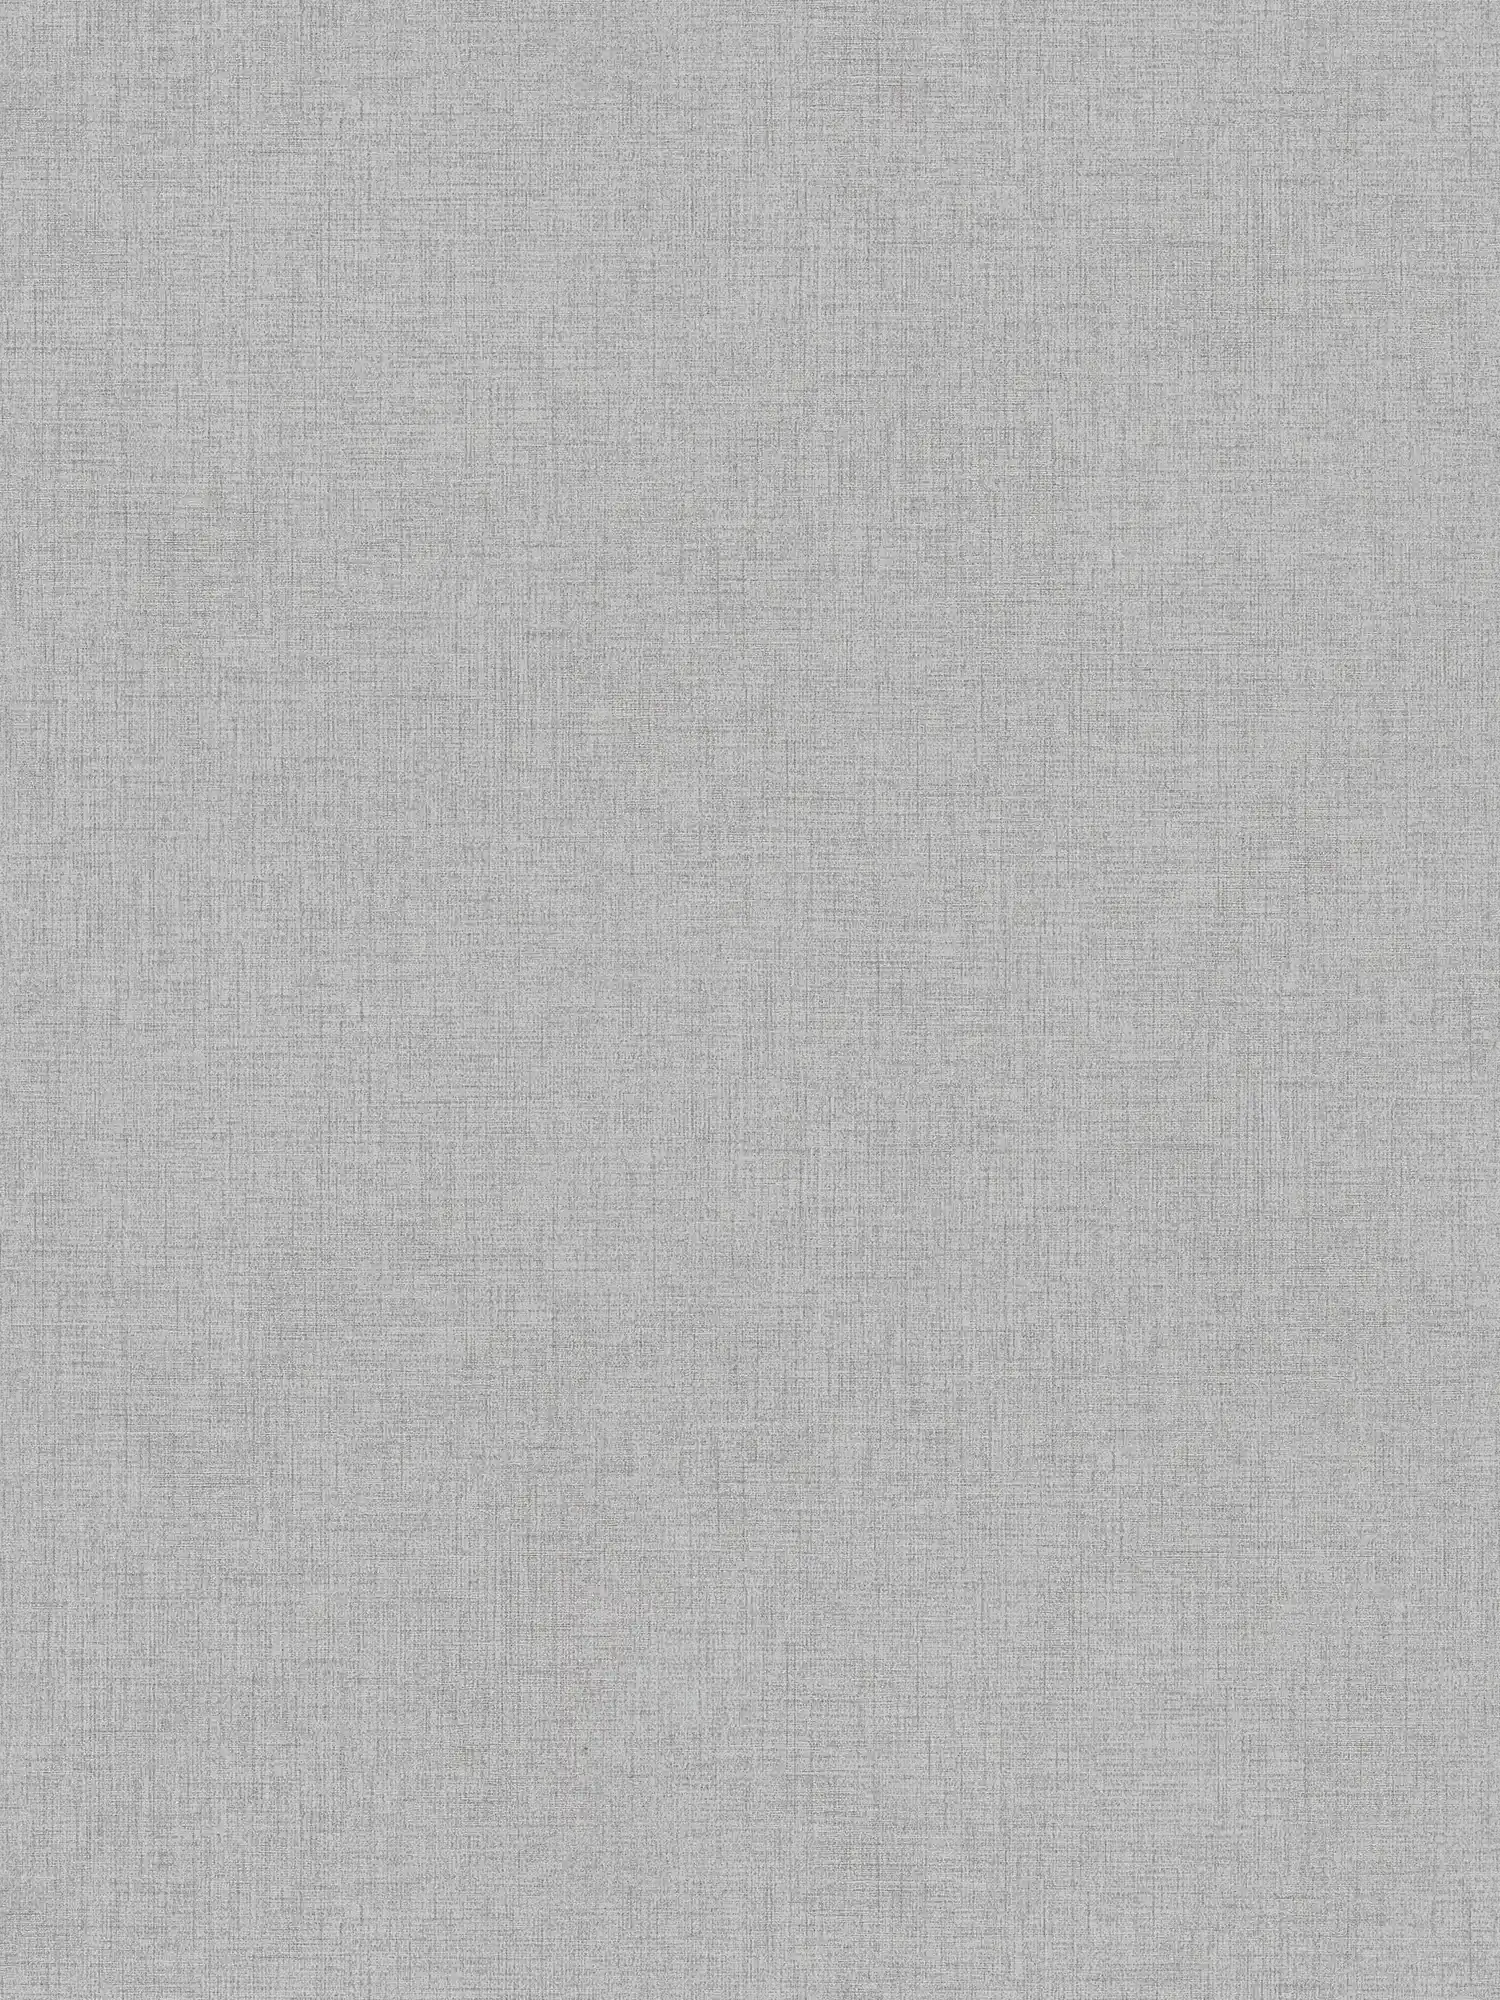             Plain wallpaper with subtle linen look - grey
        